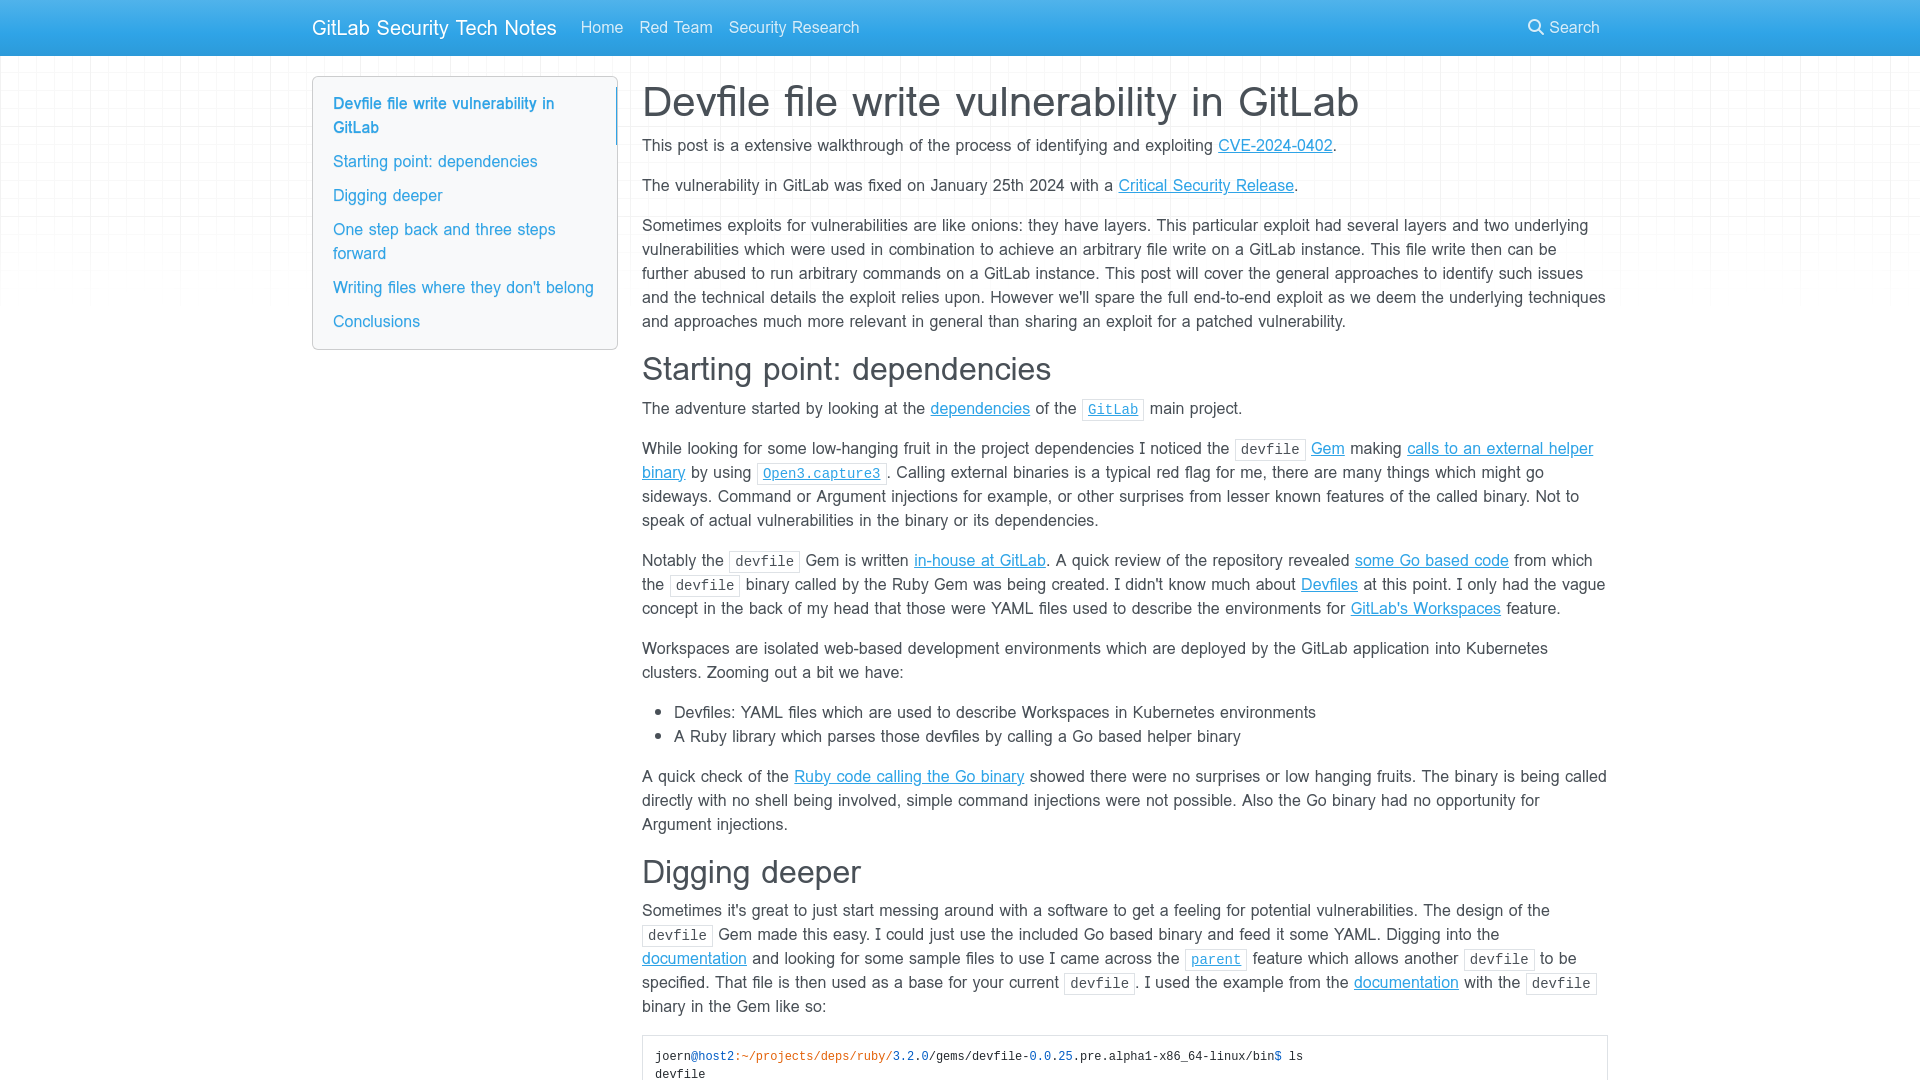 Devfile file write vulnerability in GitLab - GitLab Security Tech Notes